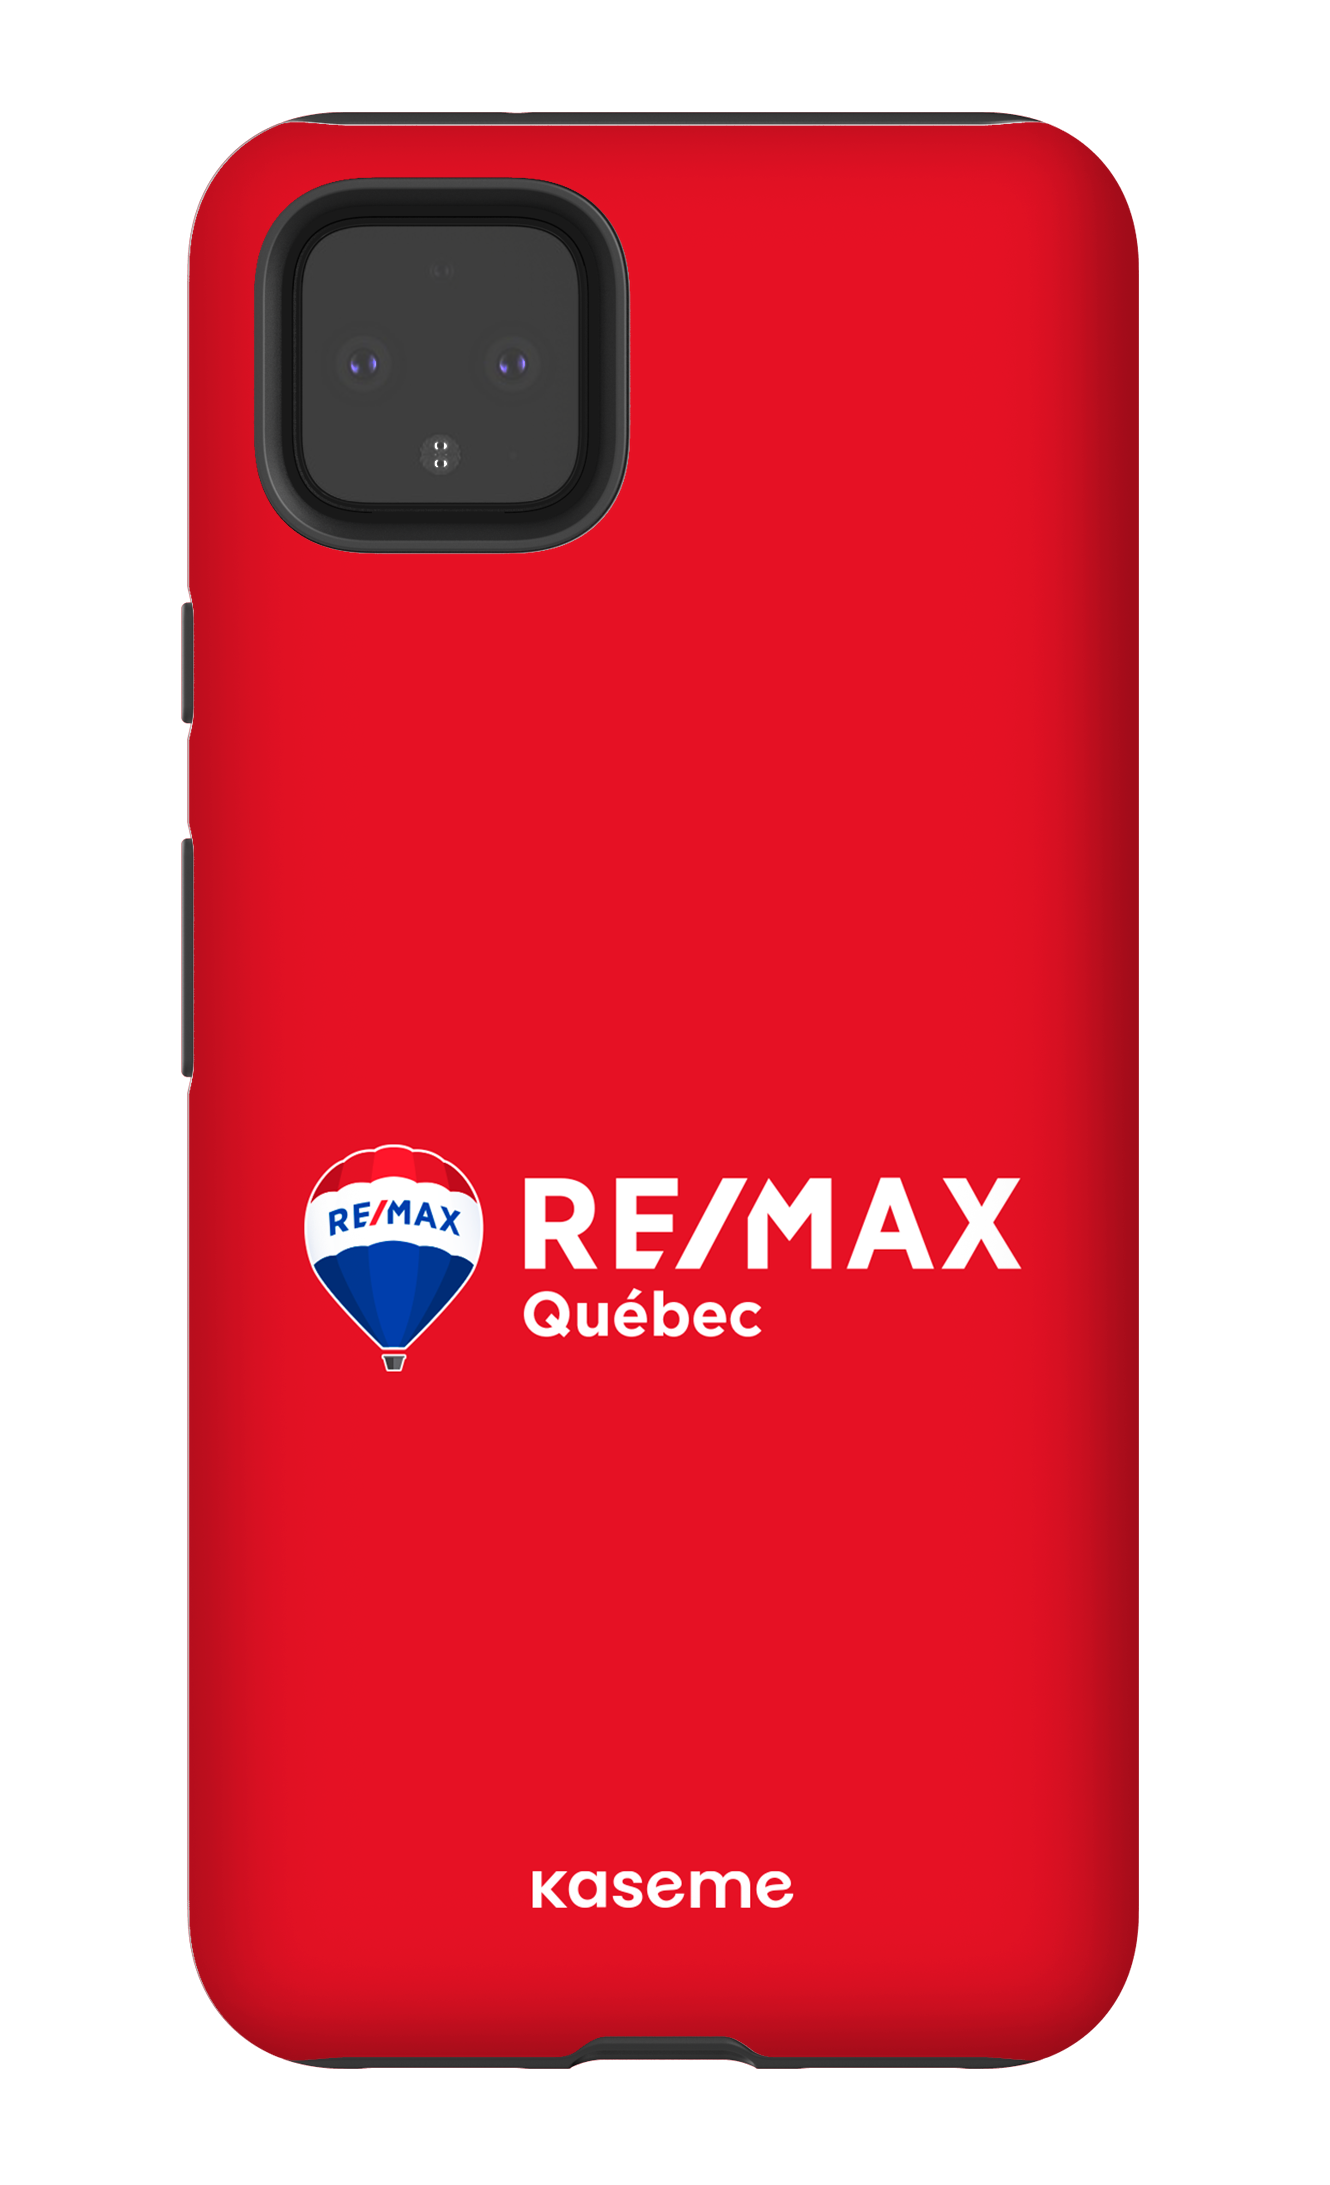 Remax Québec Rouge - Google Pixel 4 XL